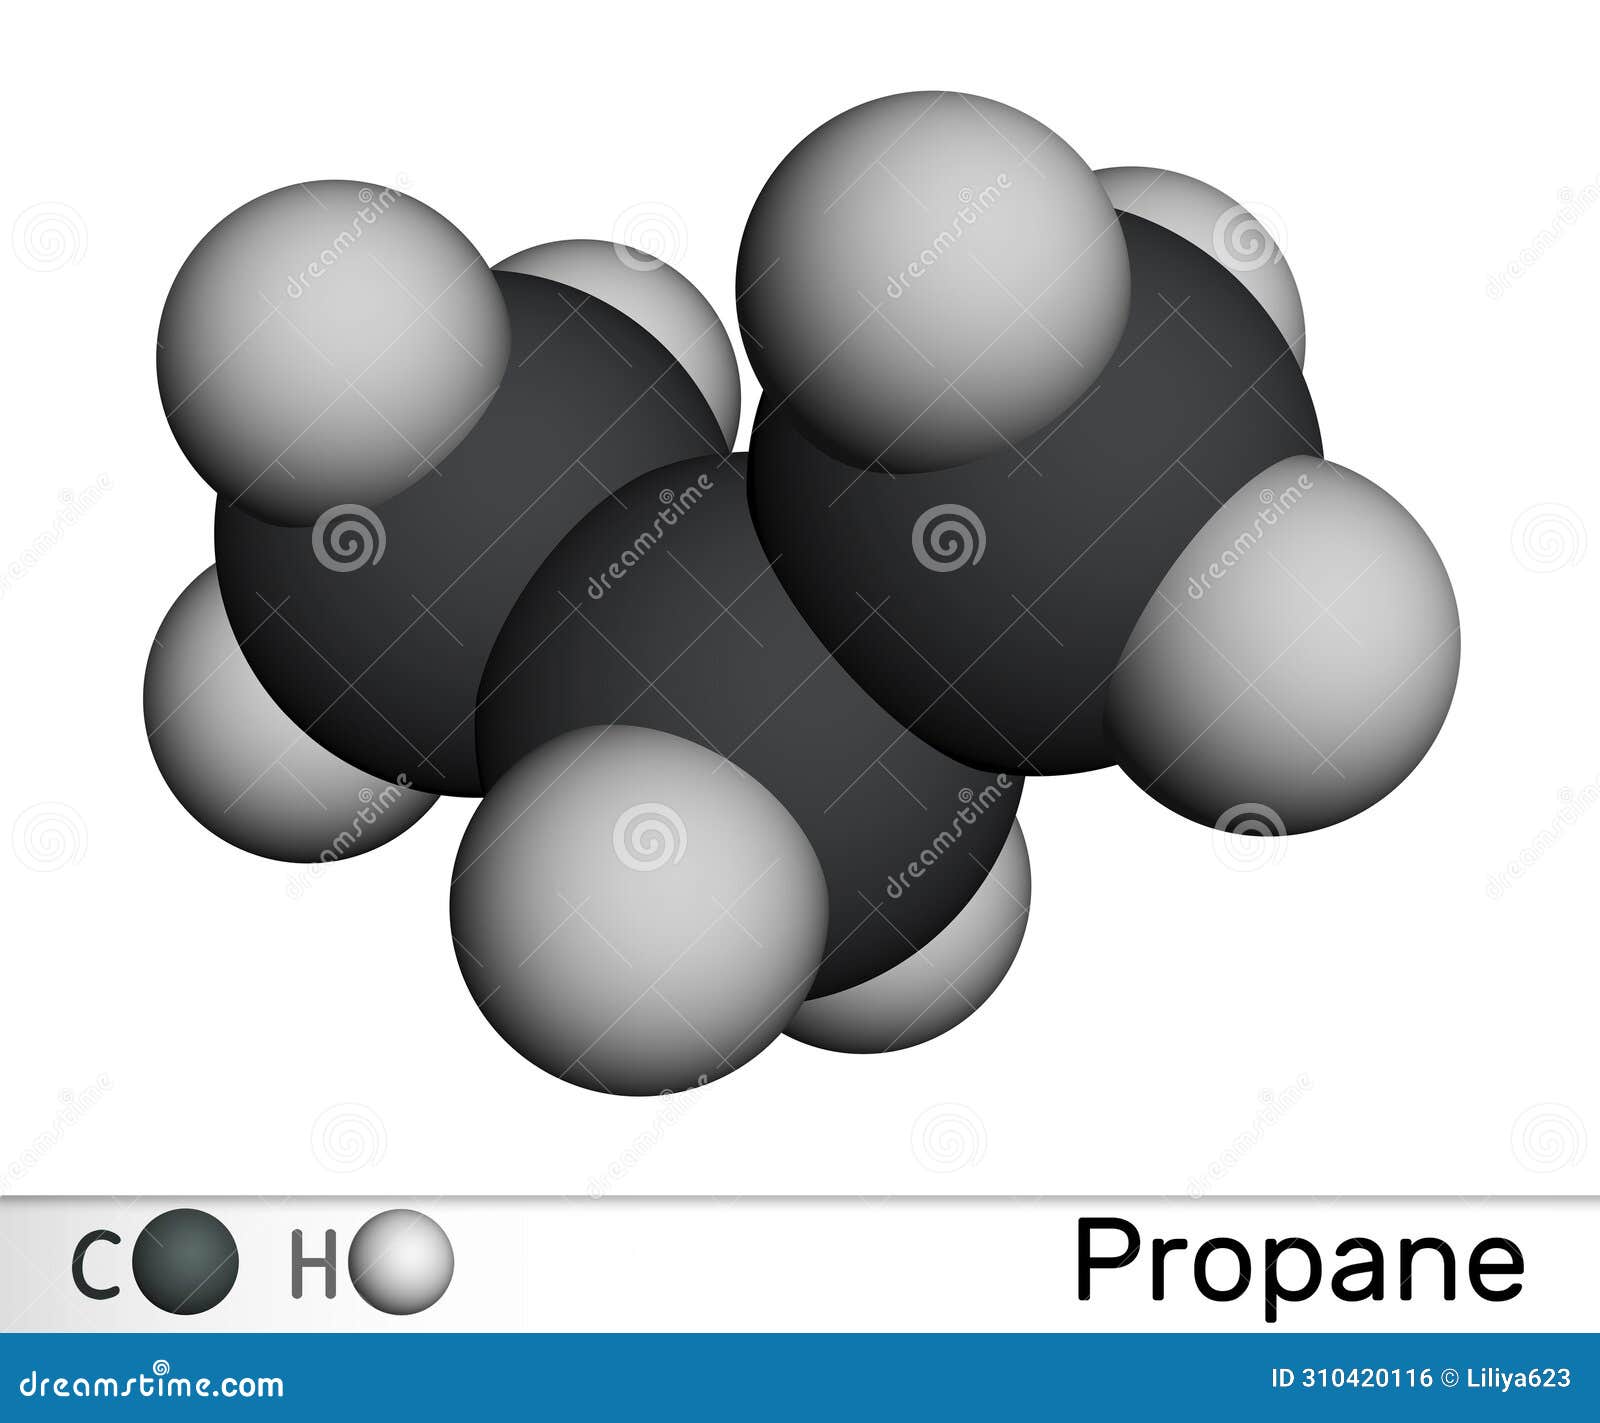 propane c3h8 molecule. it is three-carbon alkane, molecular model. 3d rendering